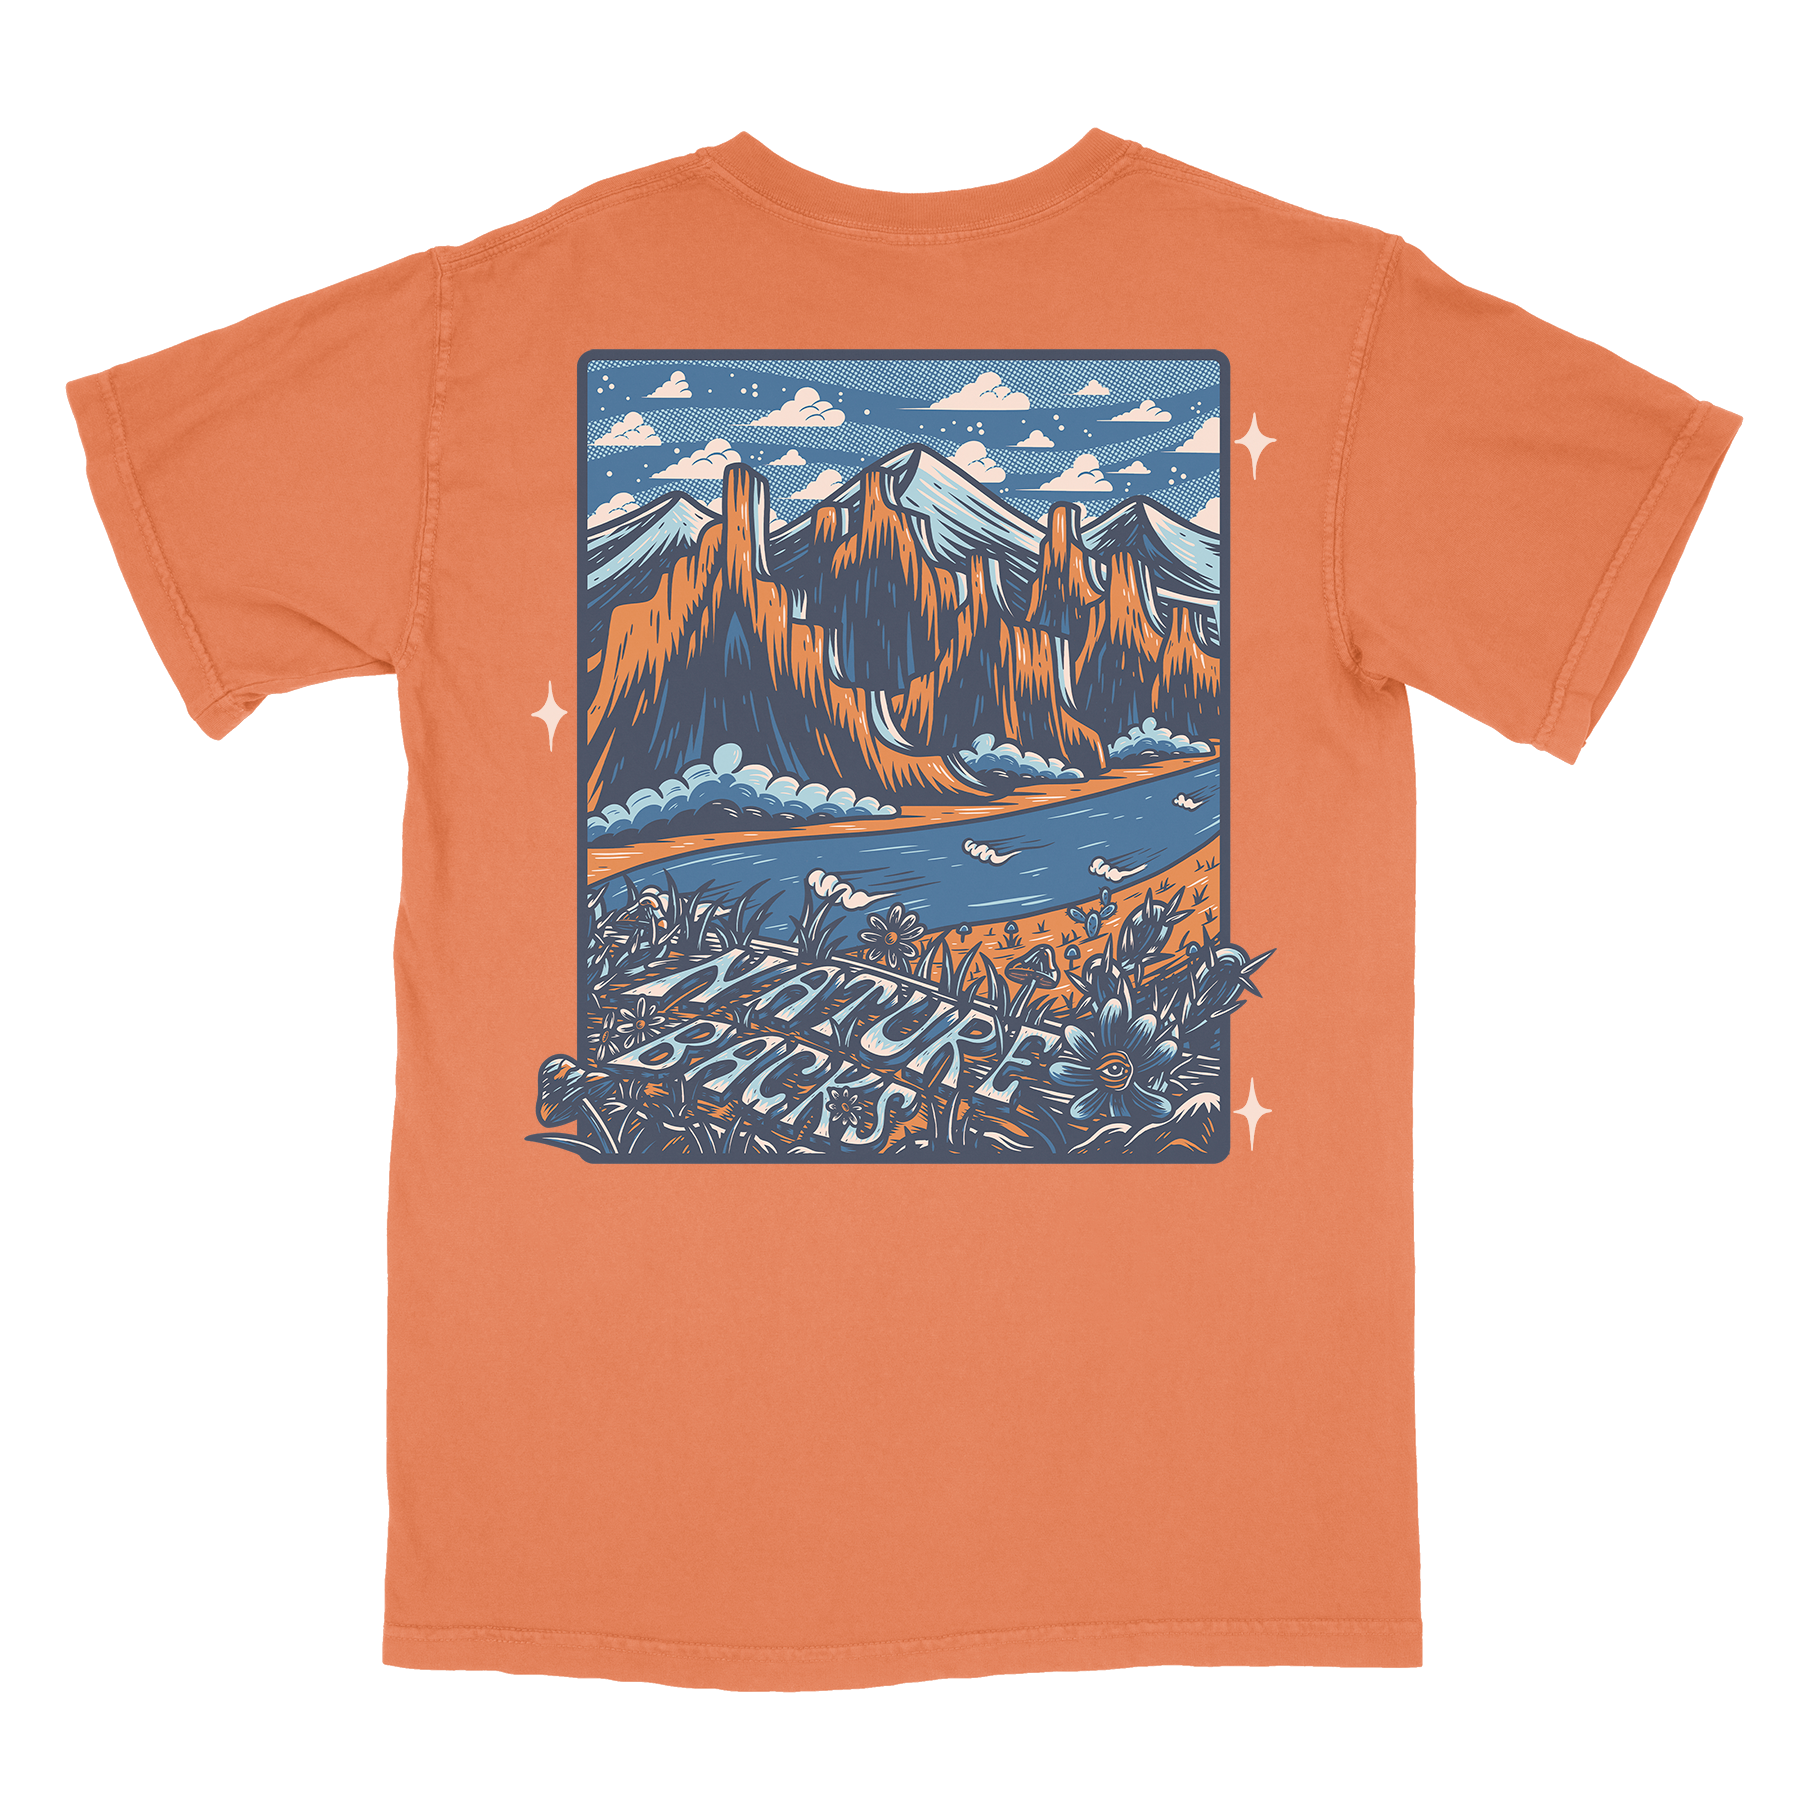 Nature Backs Comfort Colors Summit Harvest Short Sleeve T-Shirt | Nature-Inspired Design on Ultra-Soft Fabric